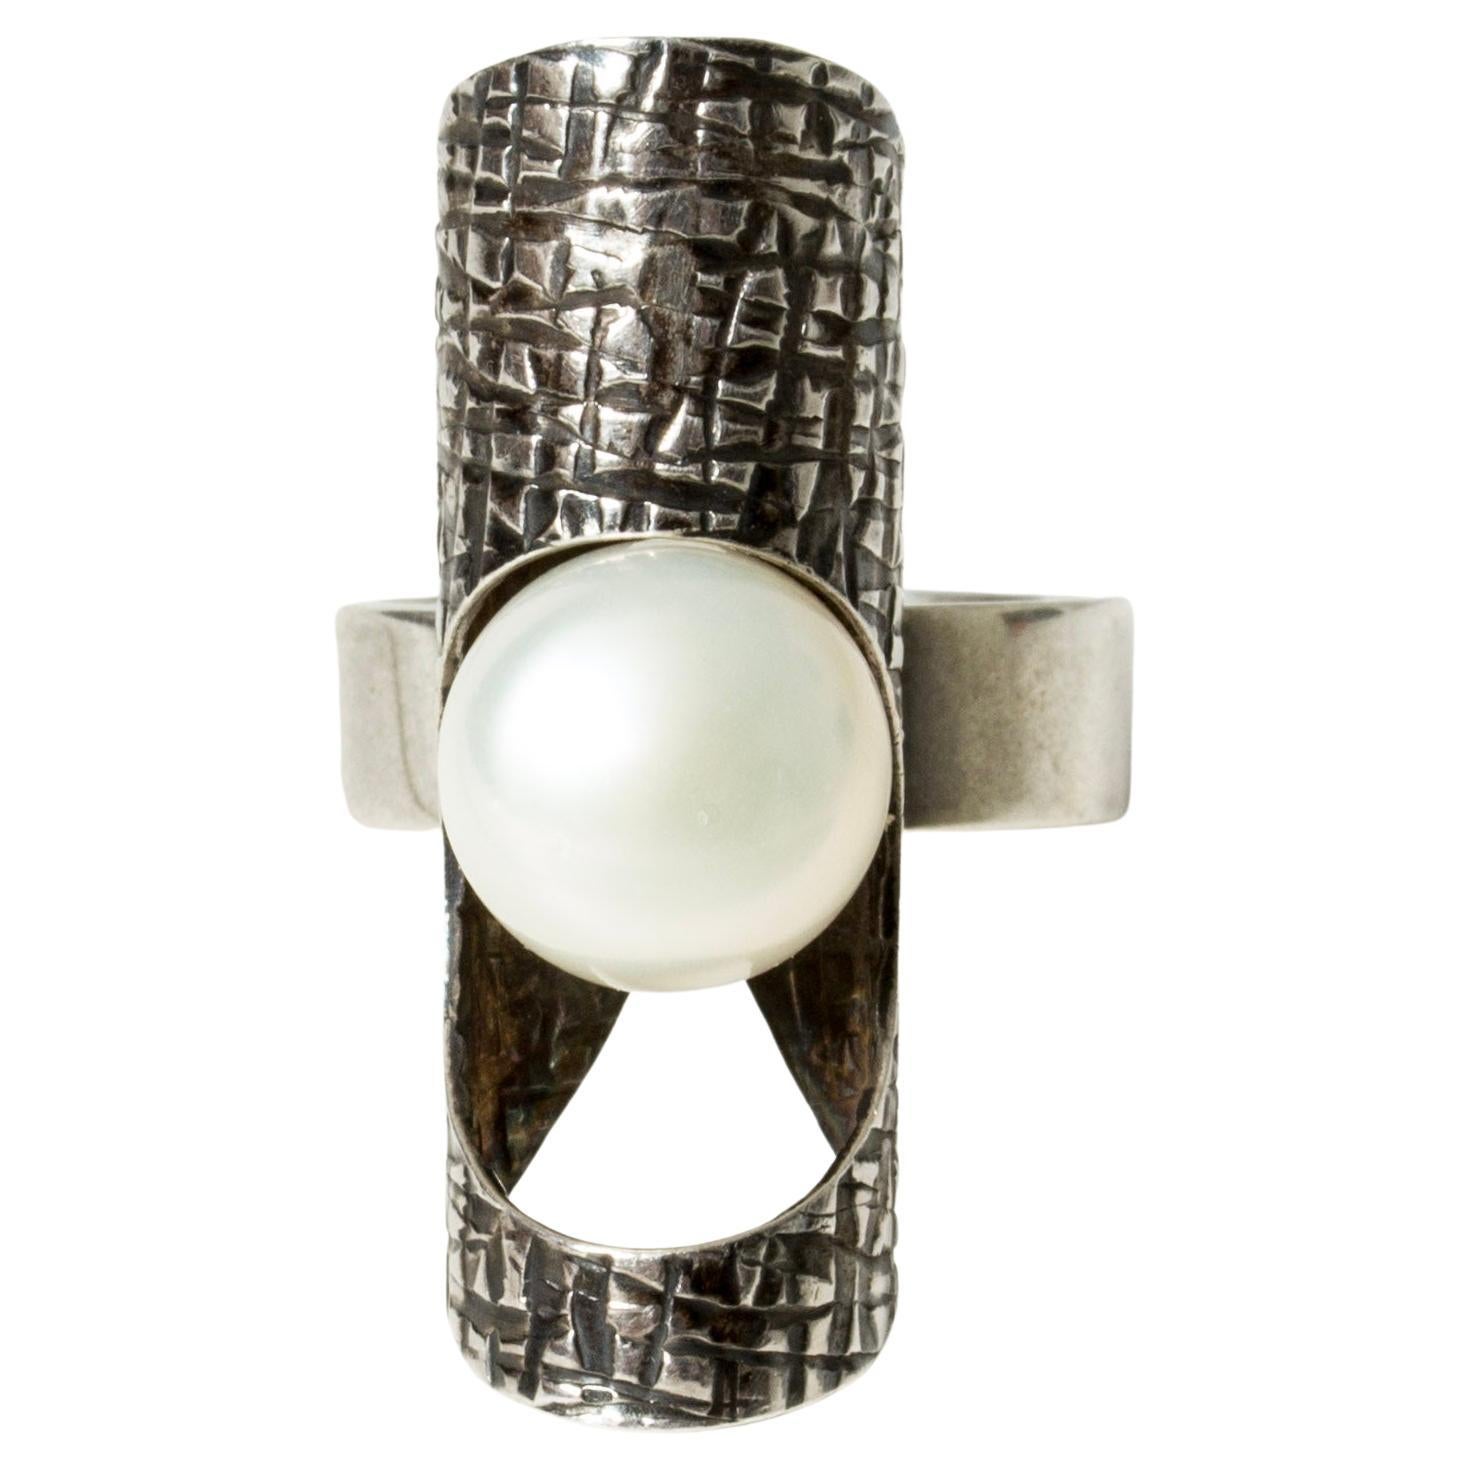 Vintage Modernist Sterling Silver Ring, Modern Organic